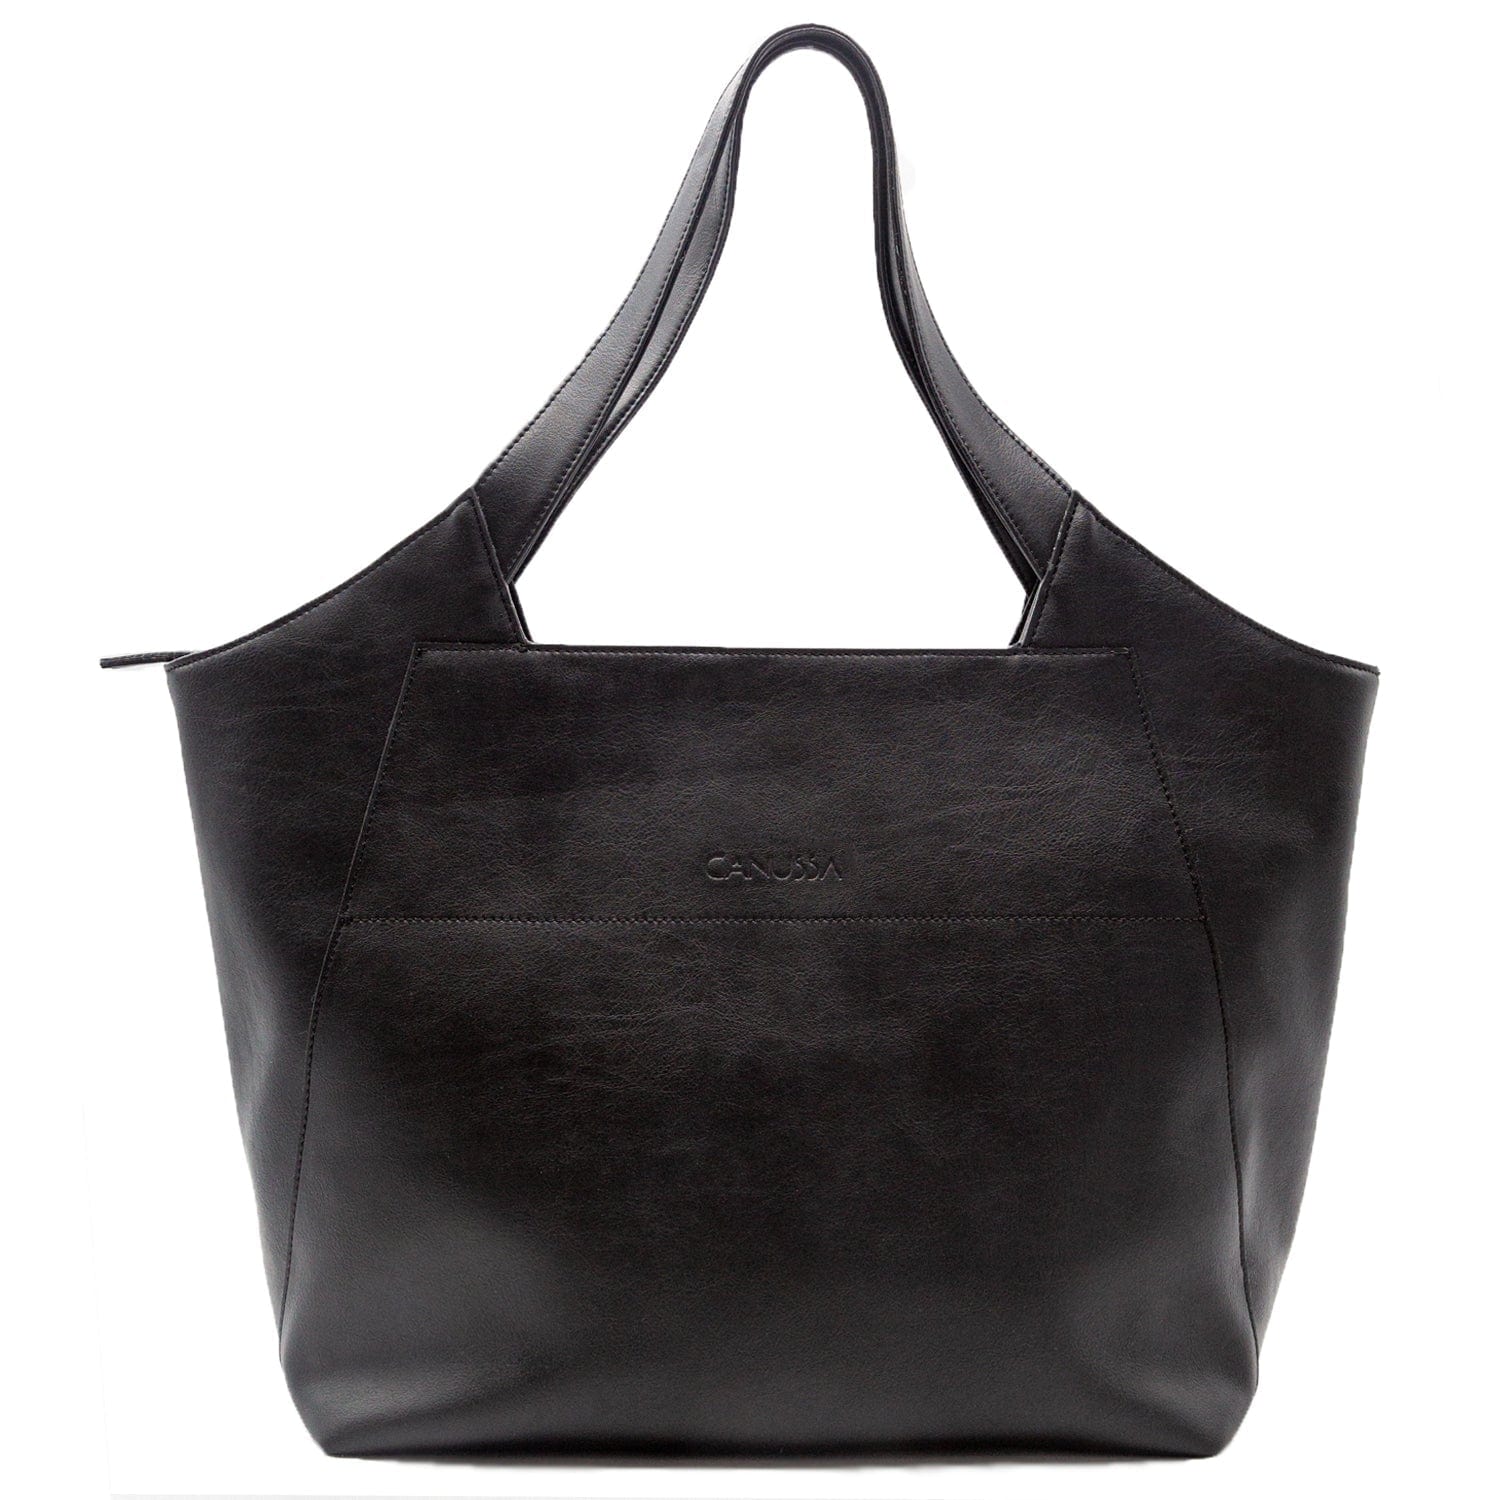 Canussa Executive Black - The bag for business women